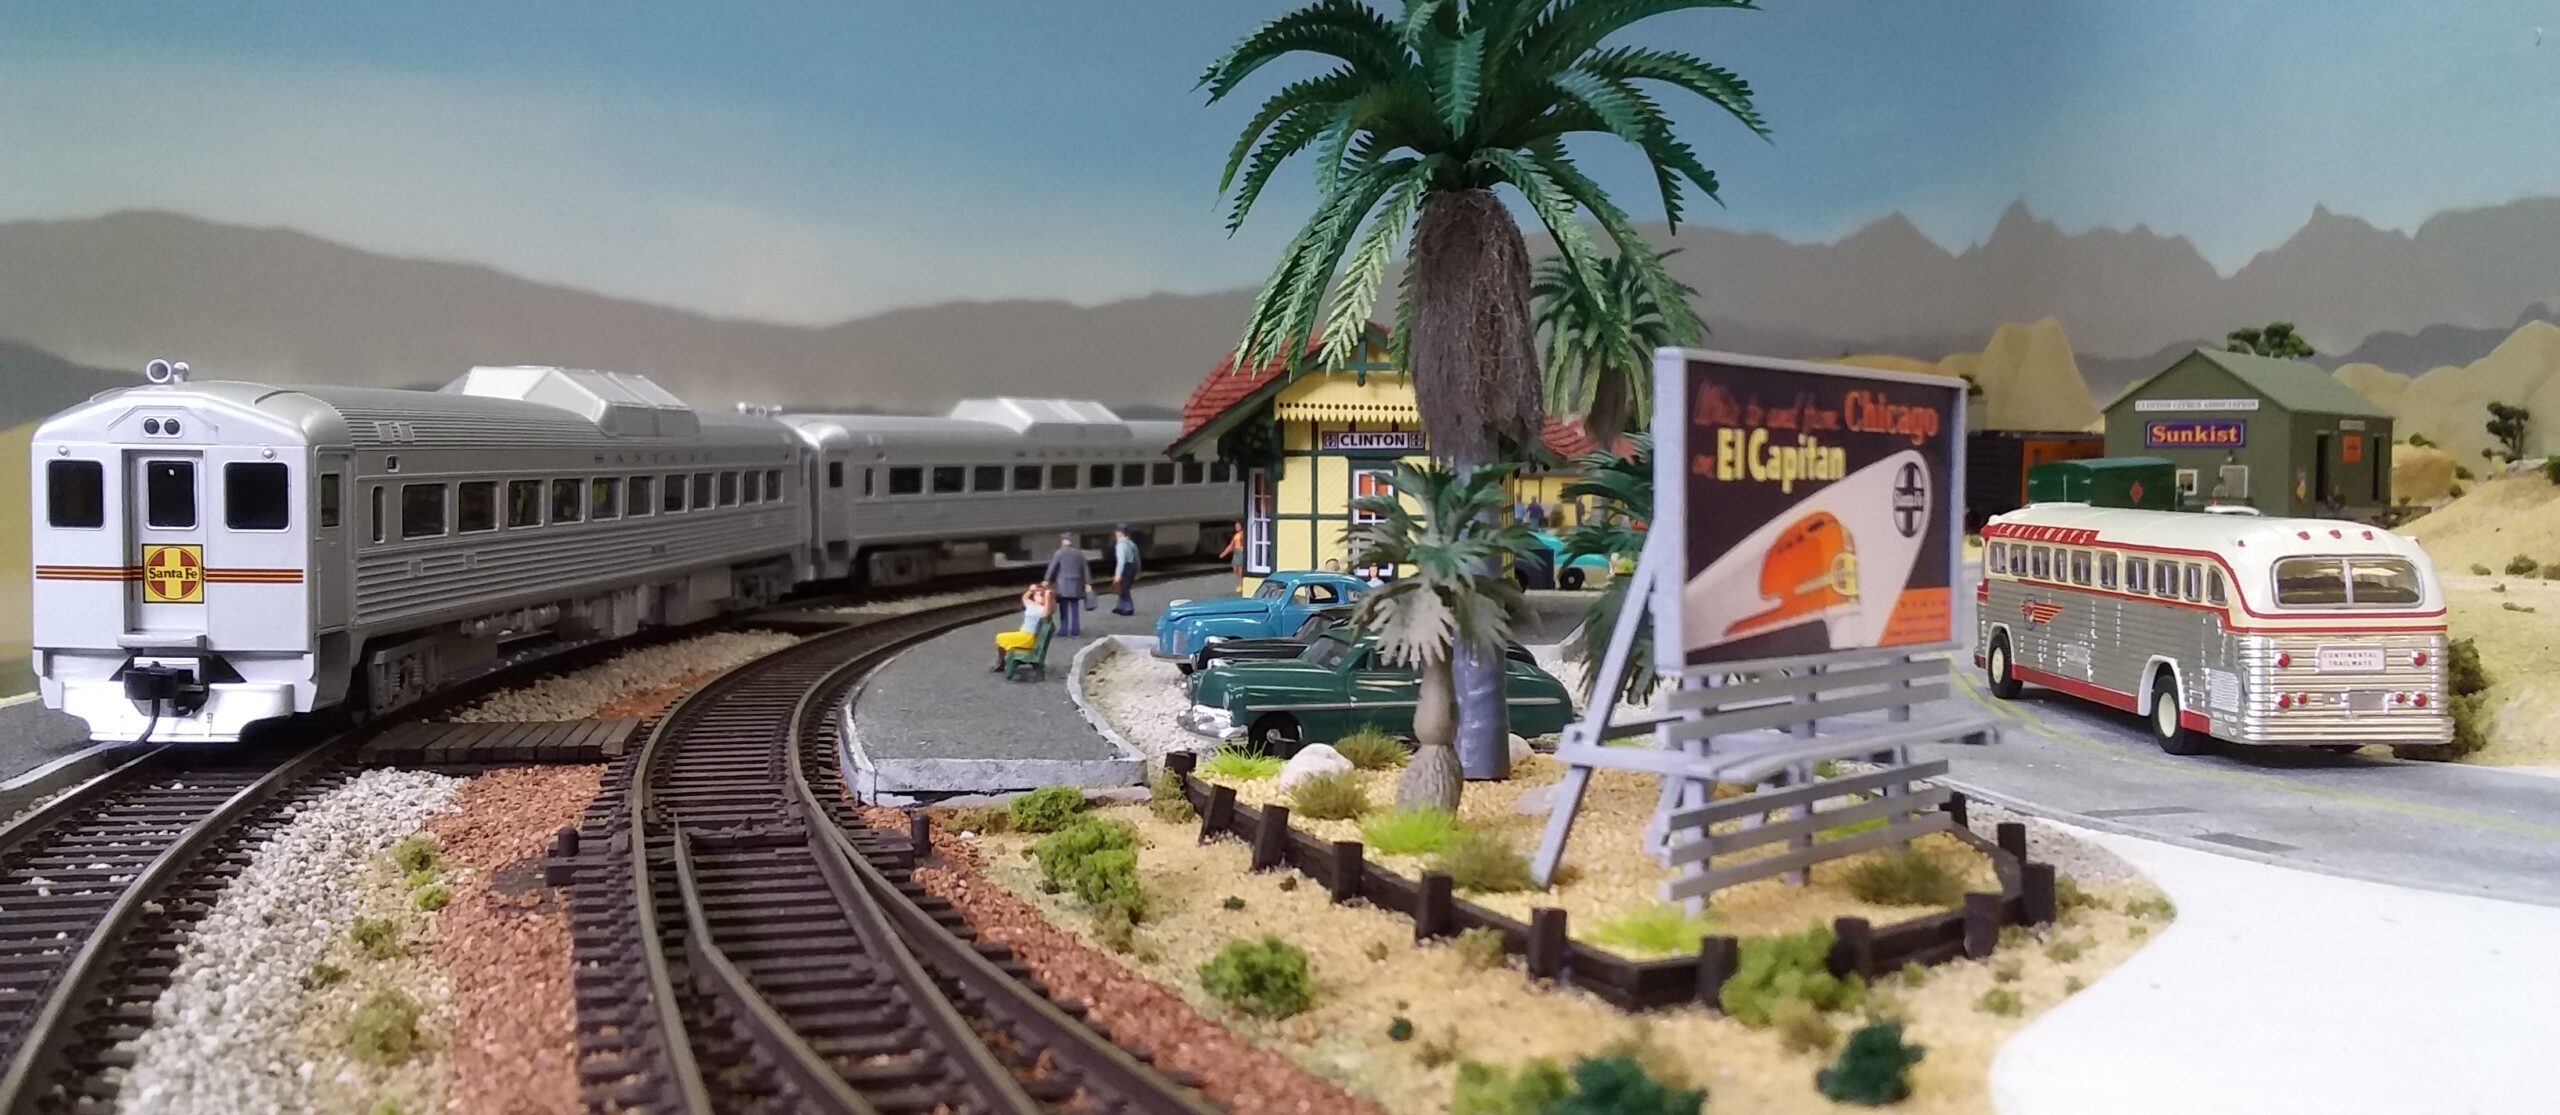 RDCs at Clinton|Santa Fe Railway, Los Angeles Division